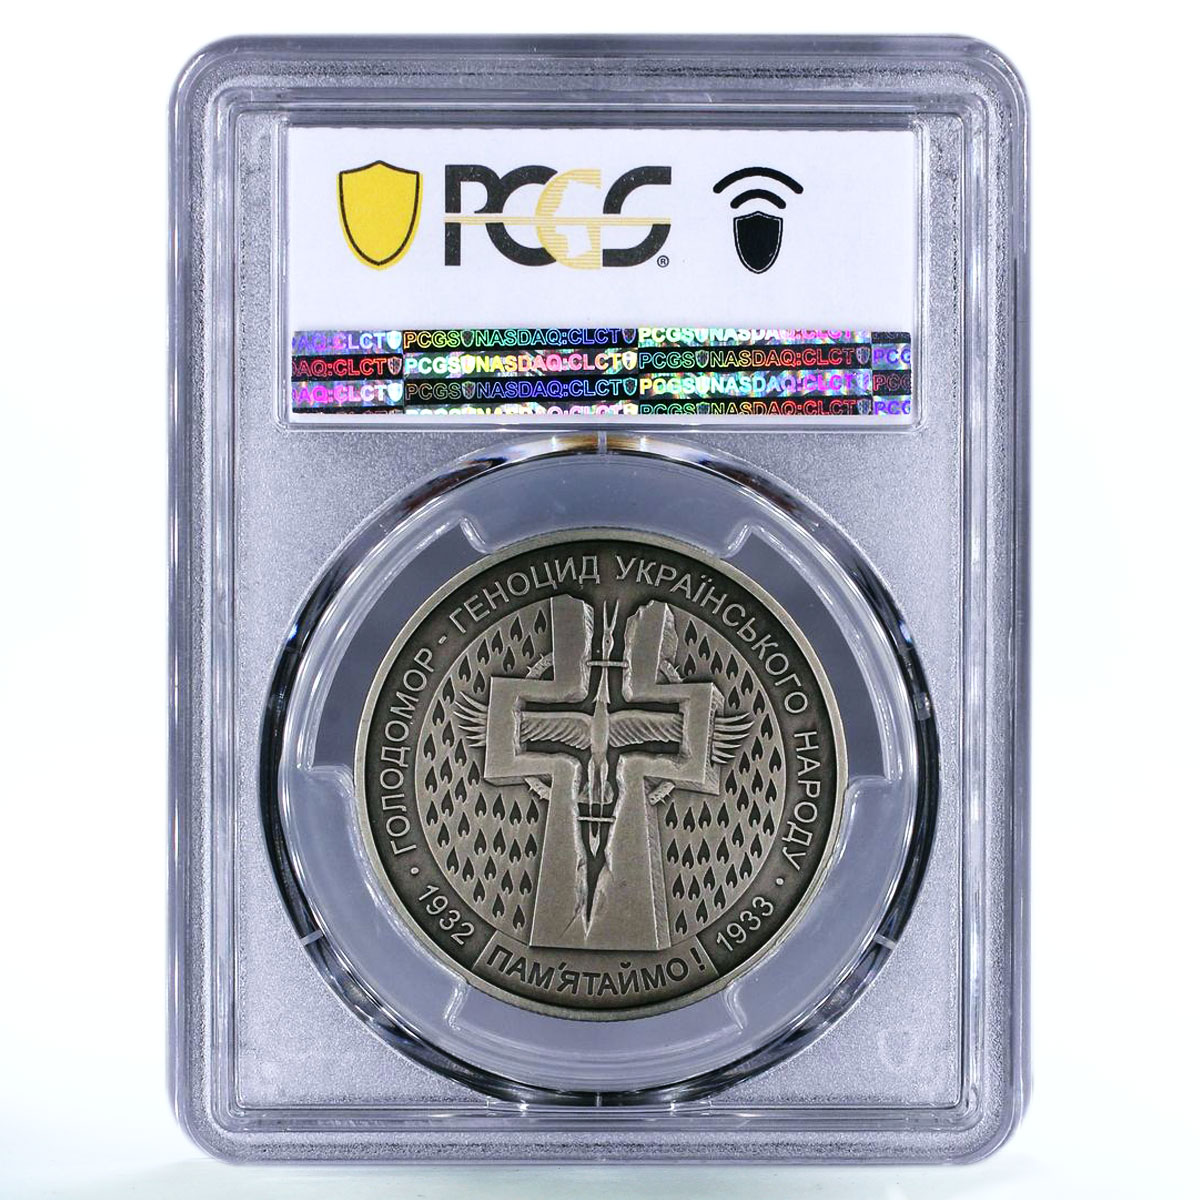 Ukraine 5 hryvnias Holodomor Famine Pople Tragedy MS70 PCGS NiAg coin 2007